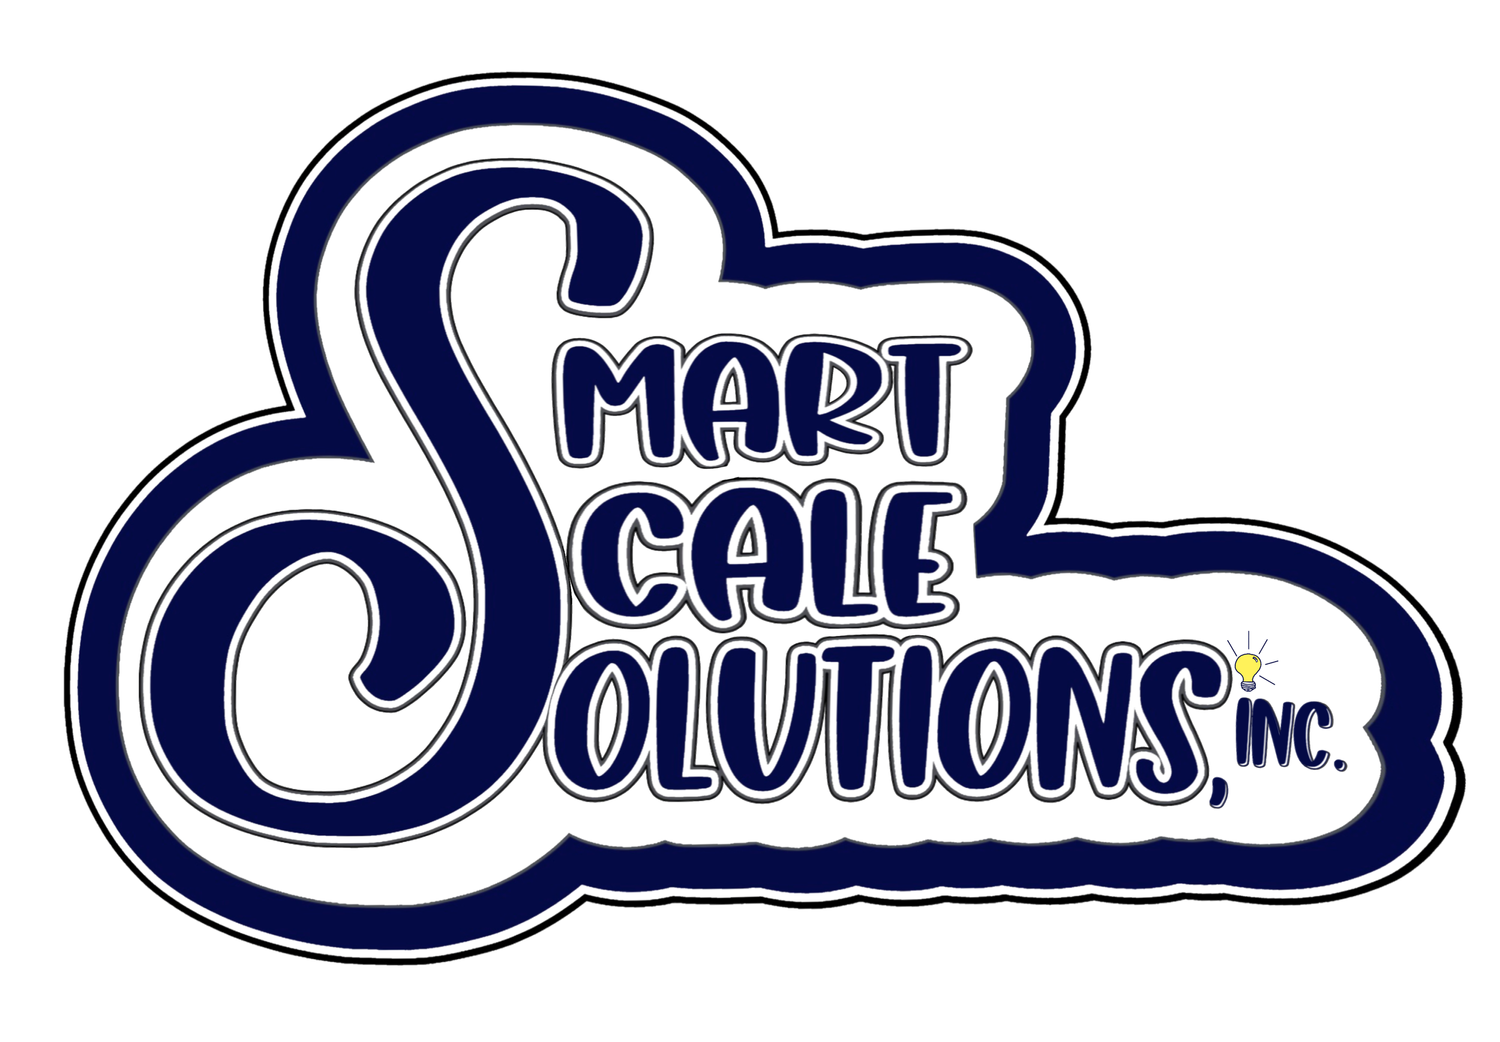 Smart Scale, Inc